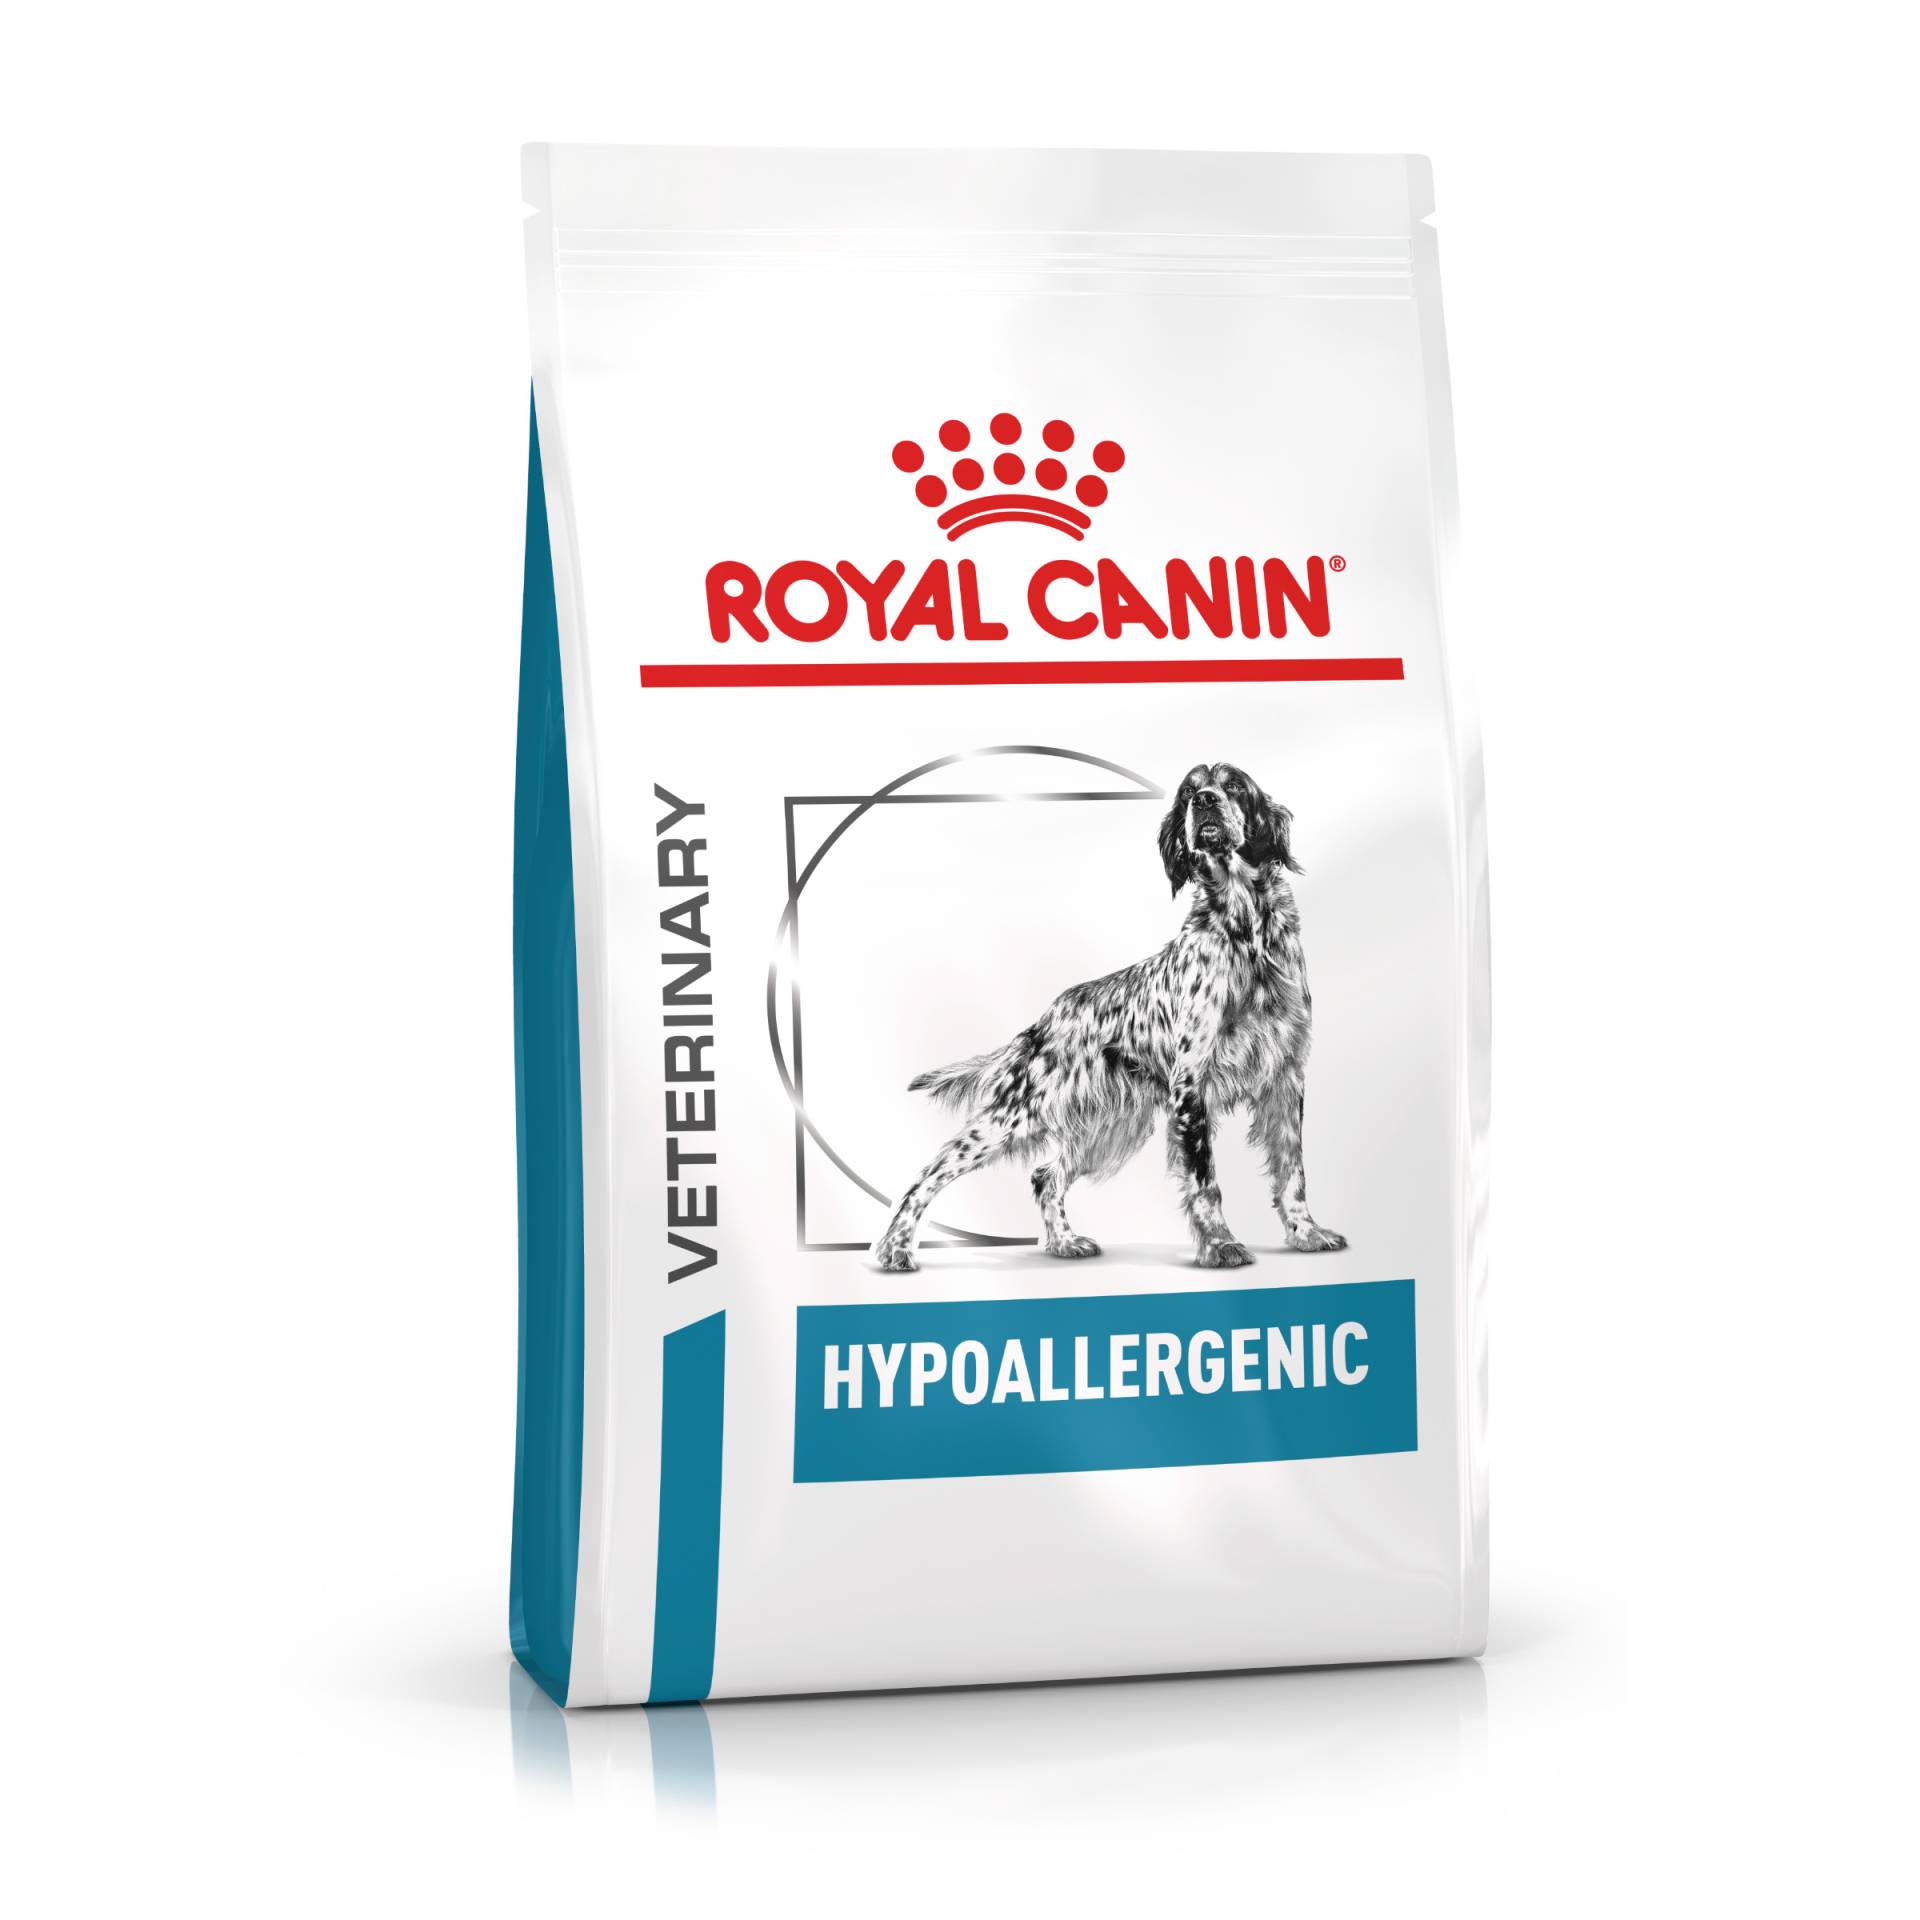 Royal Canin Veterinary Canine Hypoallergenic - 14 kg von Royal Canin Veterinary Diet